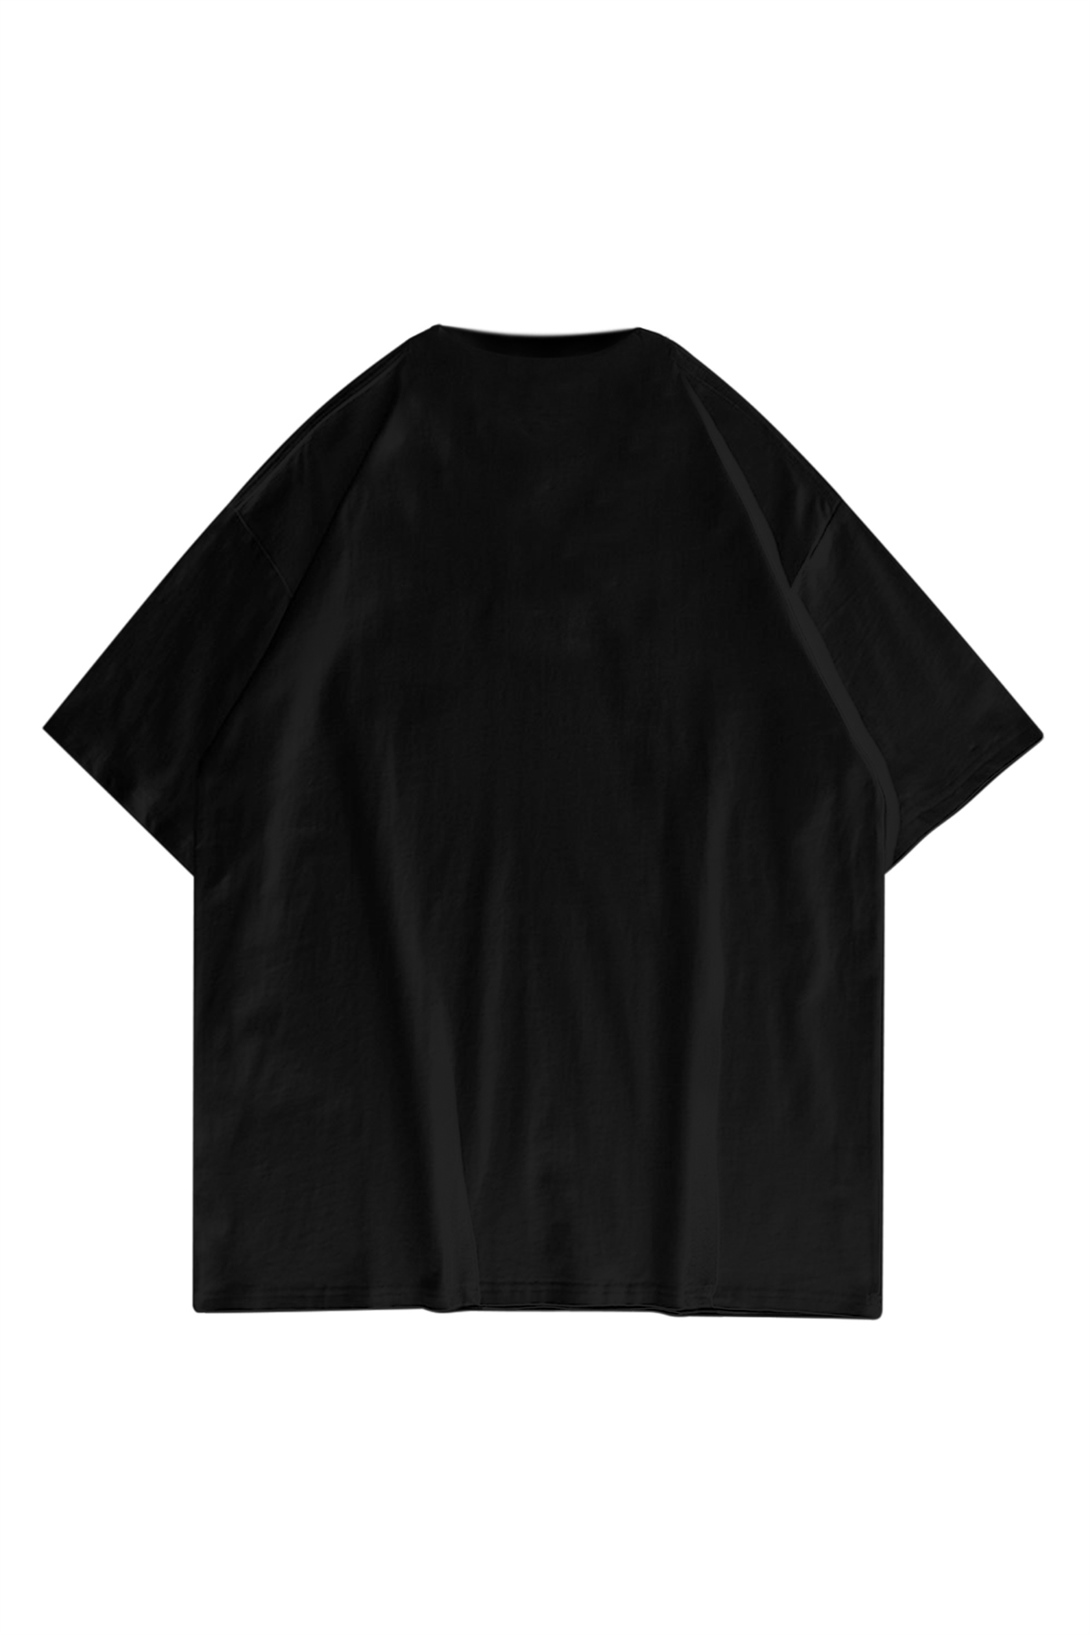 Trendiz Unisex Travis Scott Cactus Siyah Tshirt